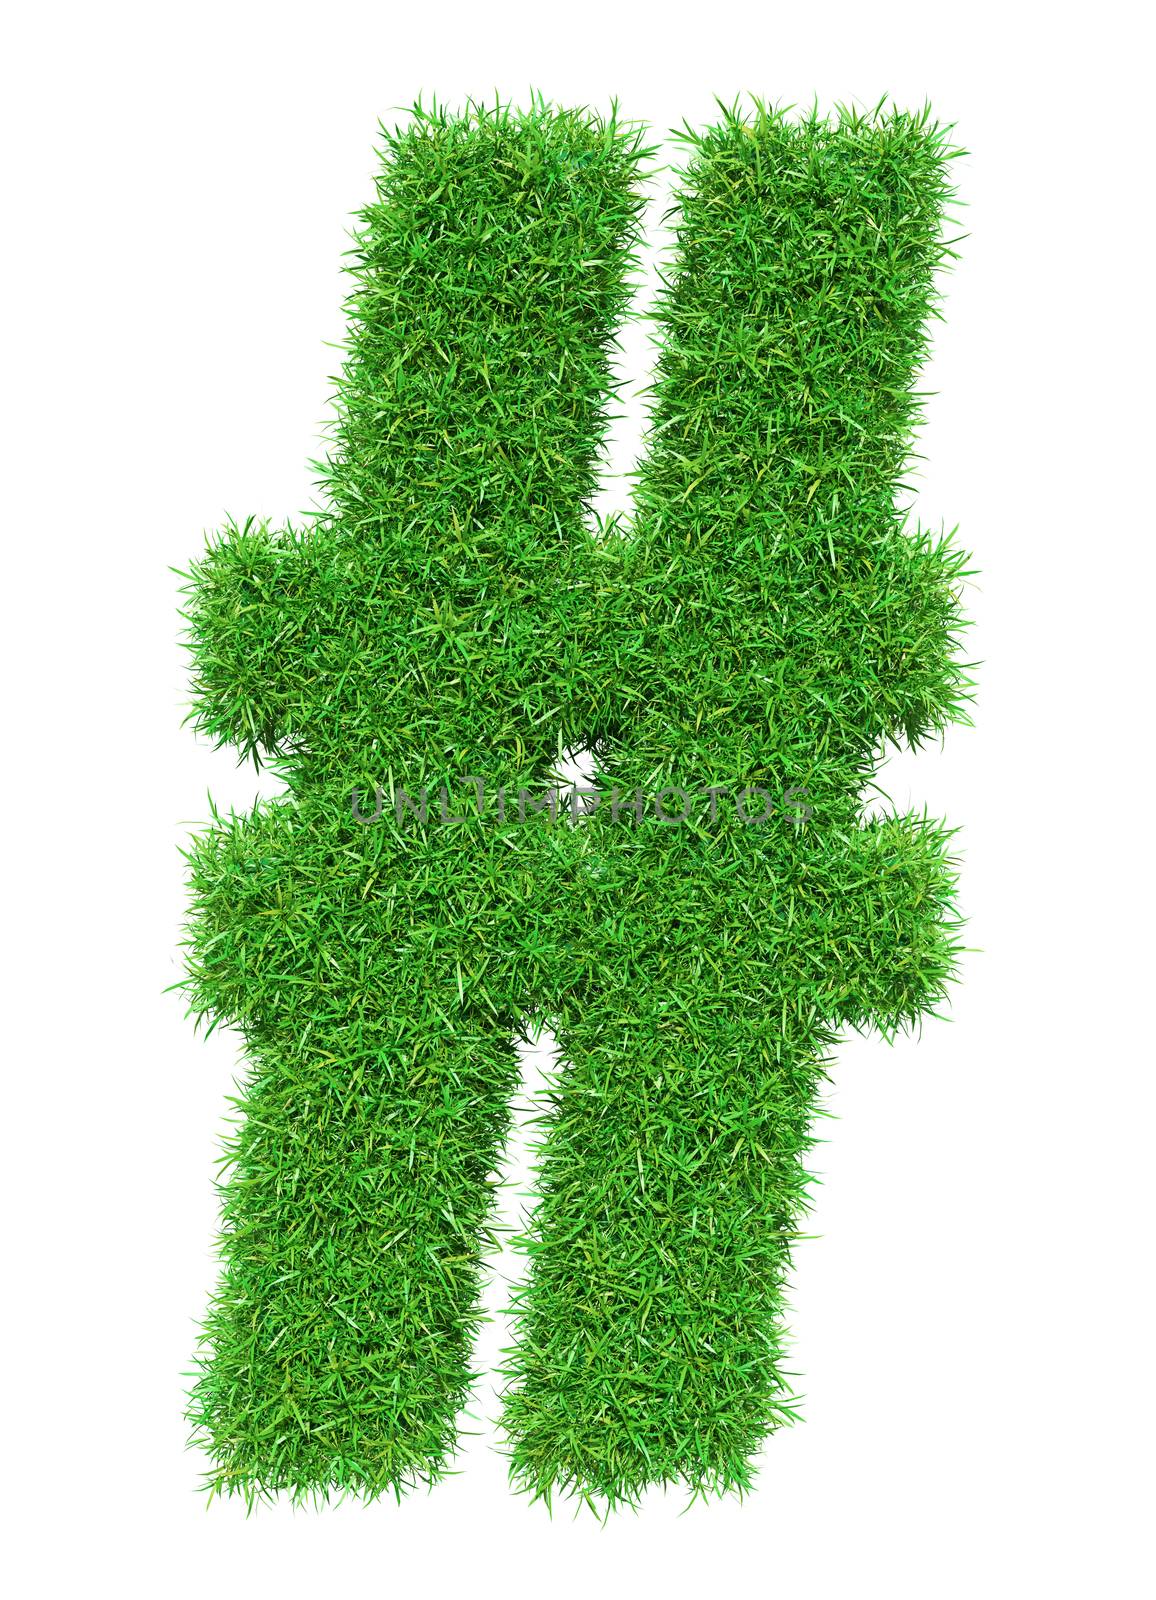 Green grass lattice, isolated on white background. 3D illustration